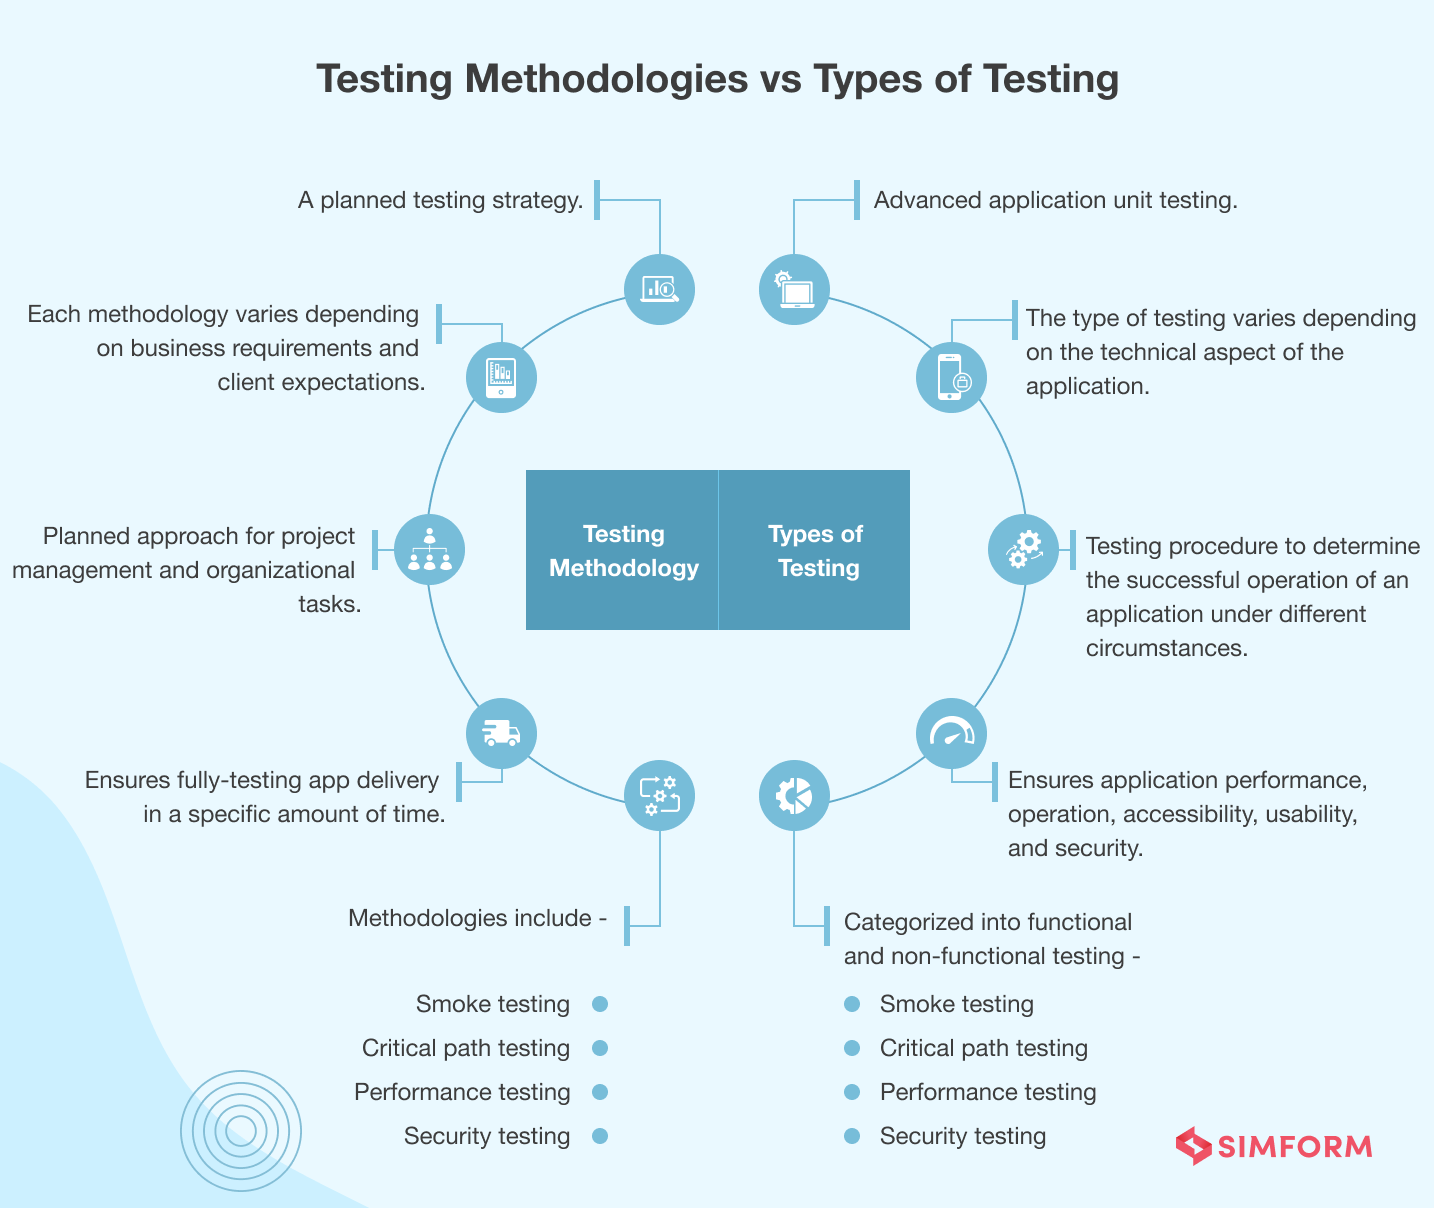 Software testing methodologies vs types of software testing